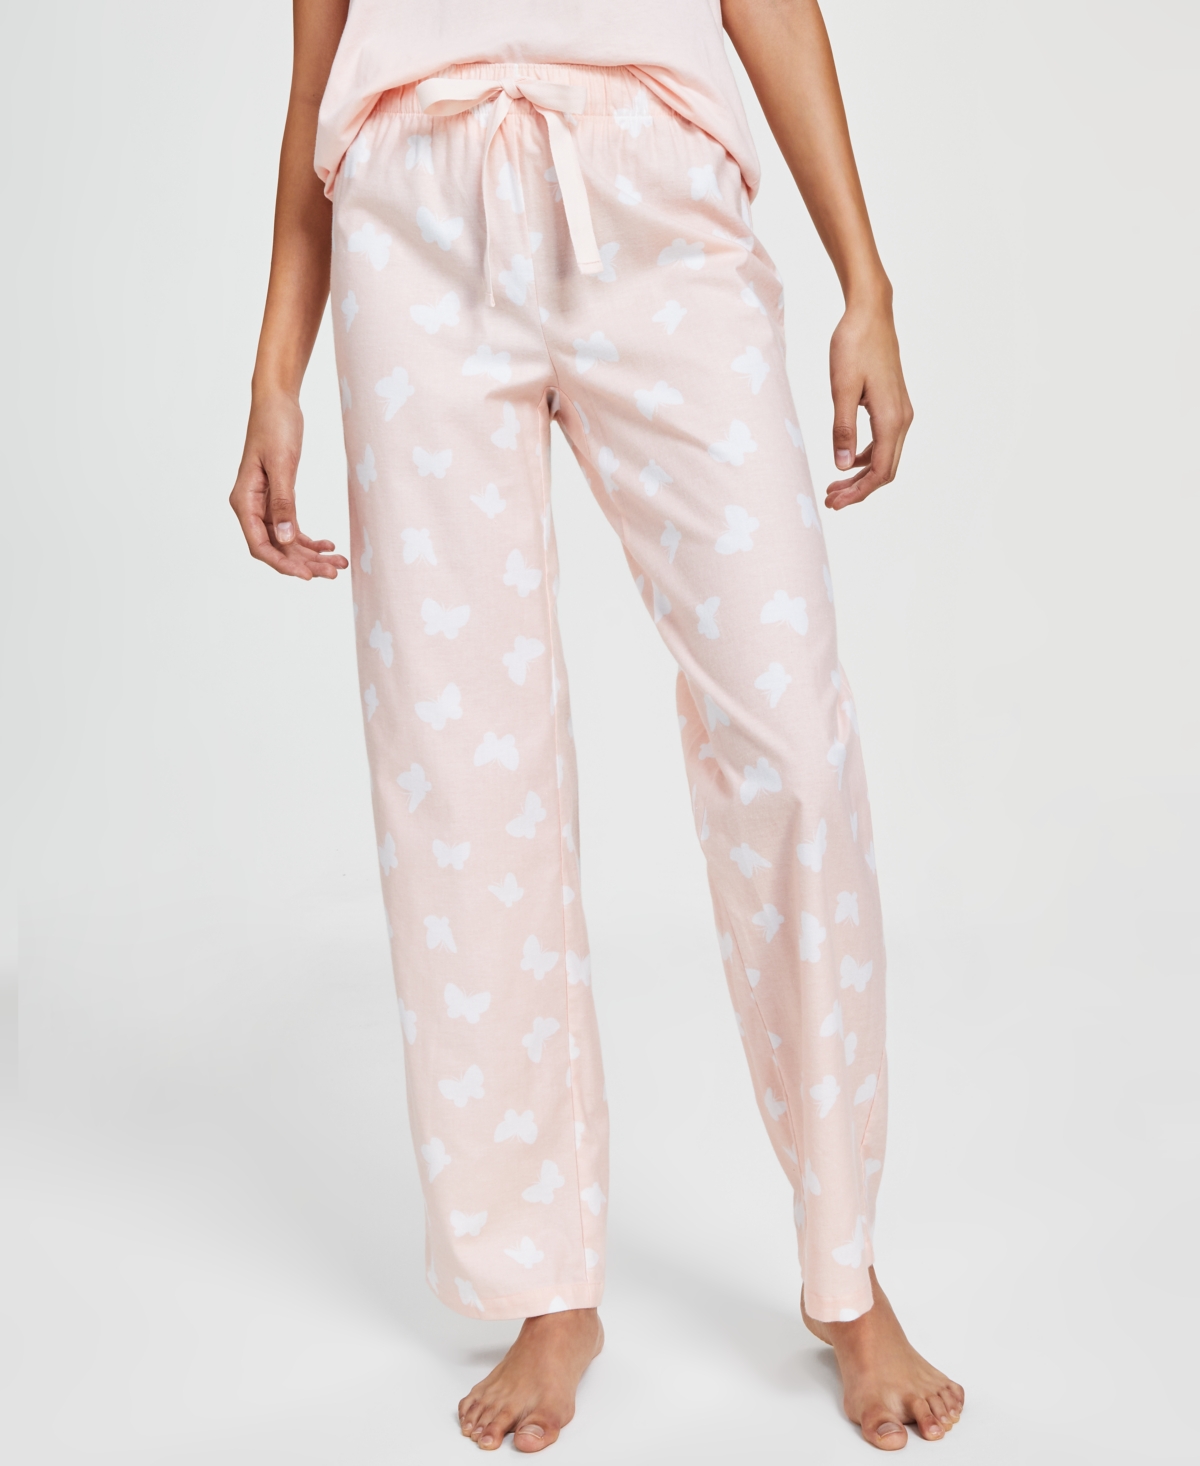 Jenni Cotton Printed Straight Leg Pajama Pants, Created for Macy's